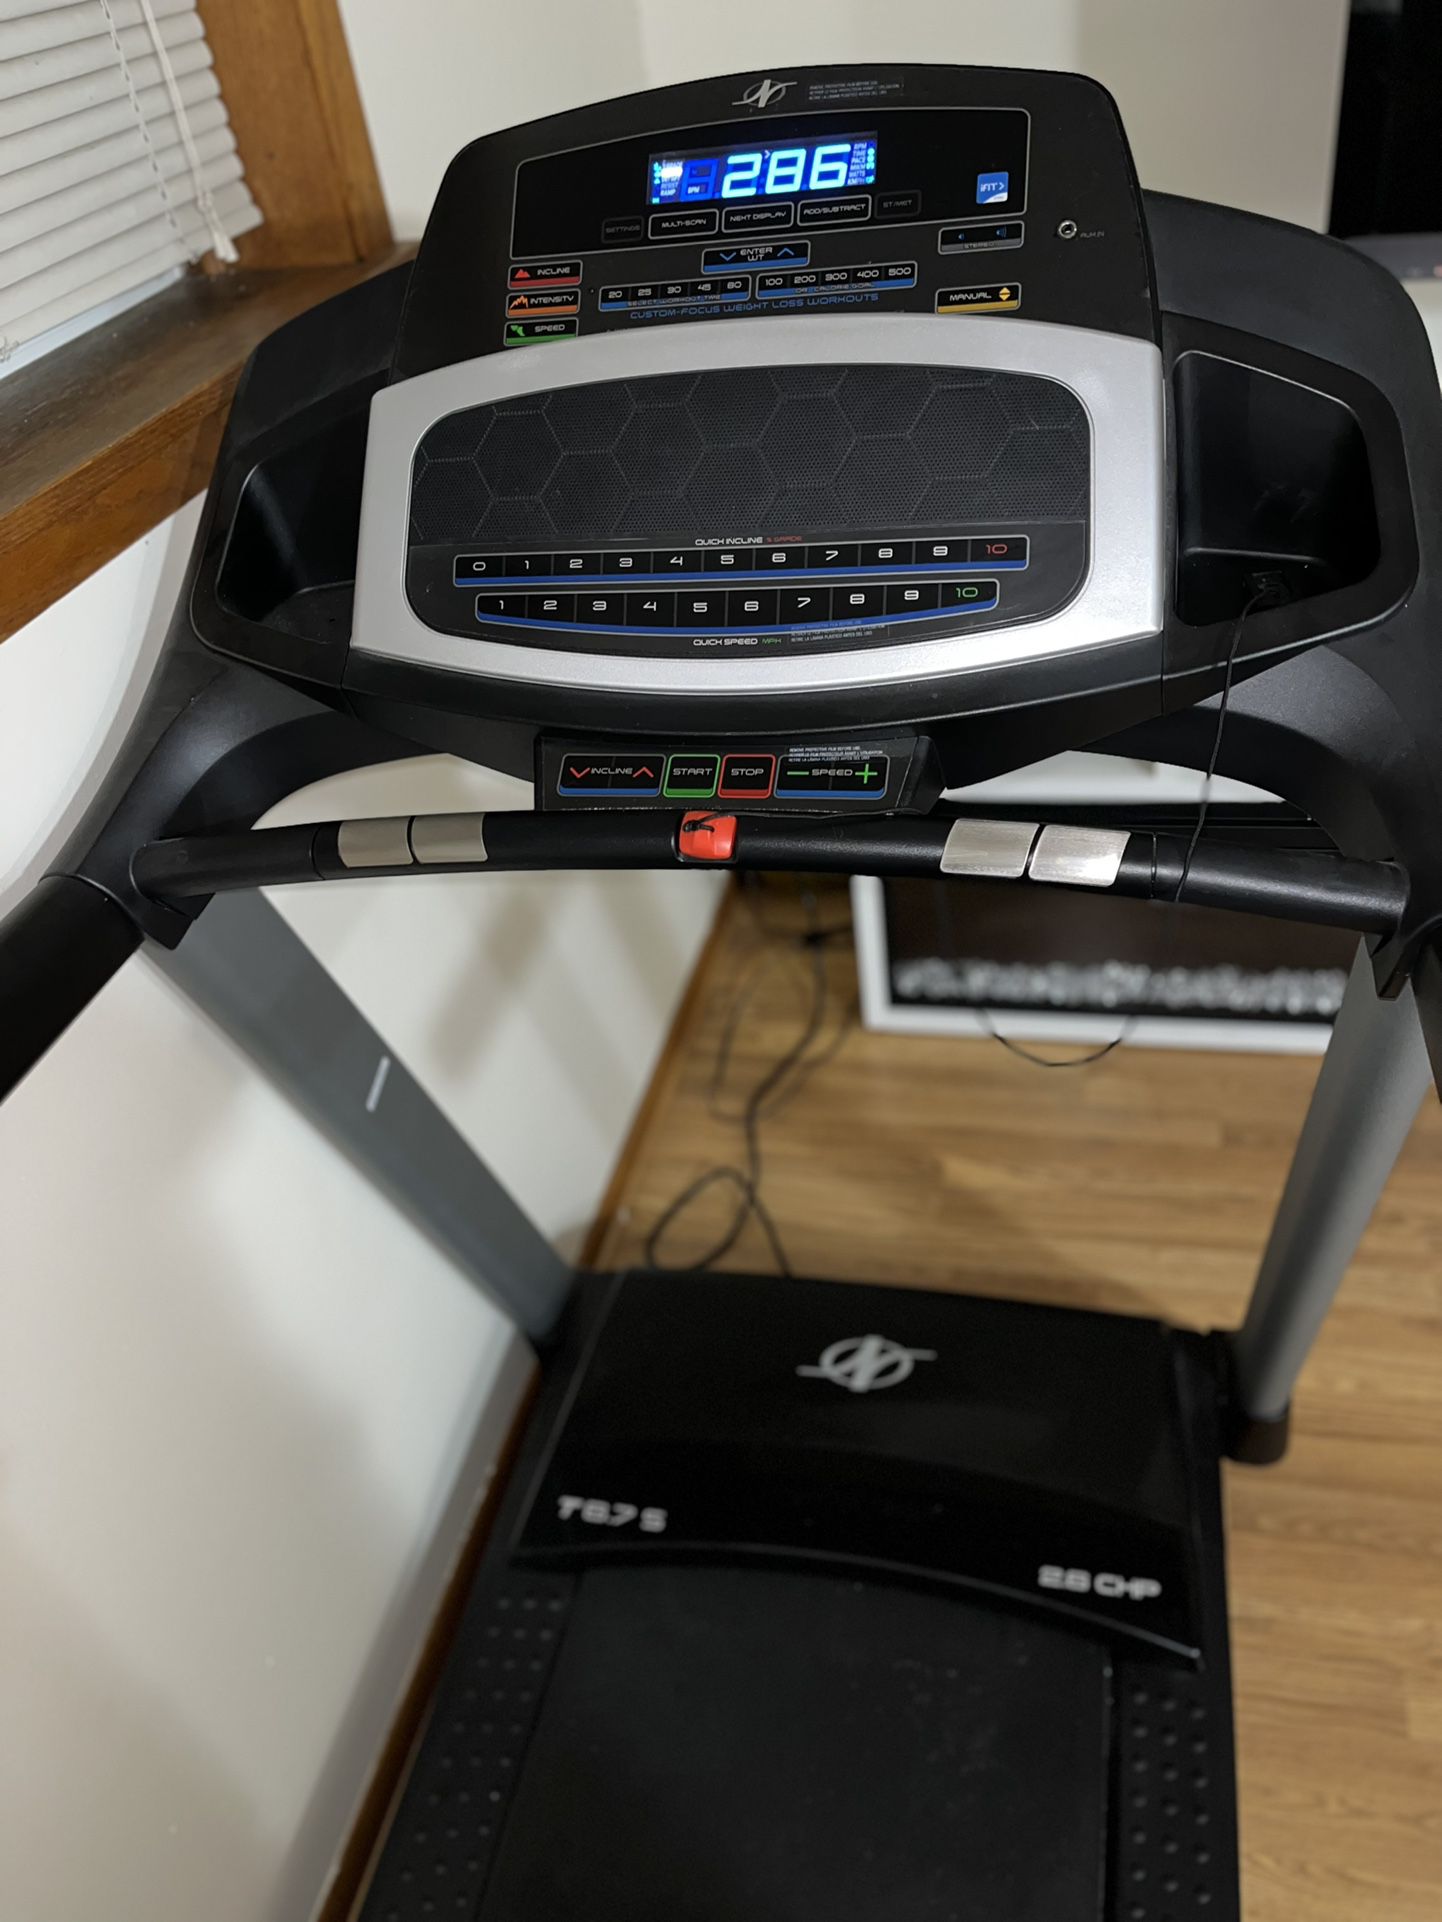 NordicTrack T6.7S Treadmill